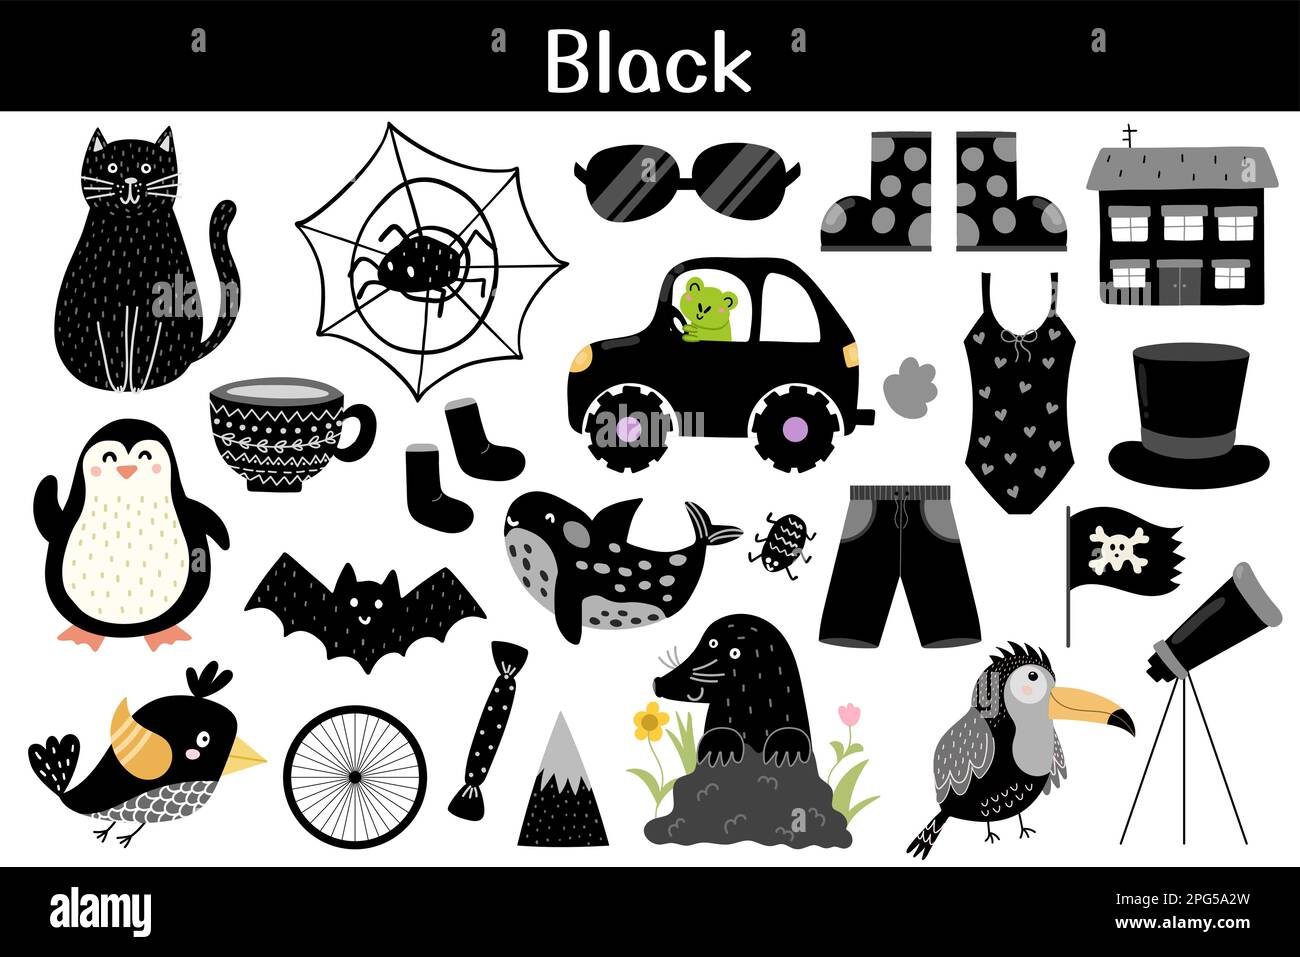 https://c8.alamy.com/compes/2pg5a2w/objetos-de-color-negro-definidos-aprendiendo-colores-para-ninos-linda-coleccion-de-elementos-2pg5a2w.jpg